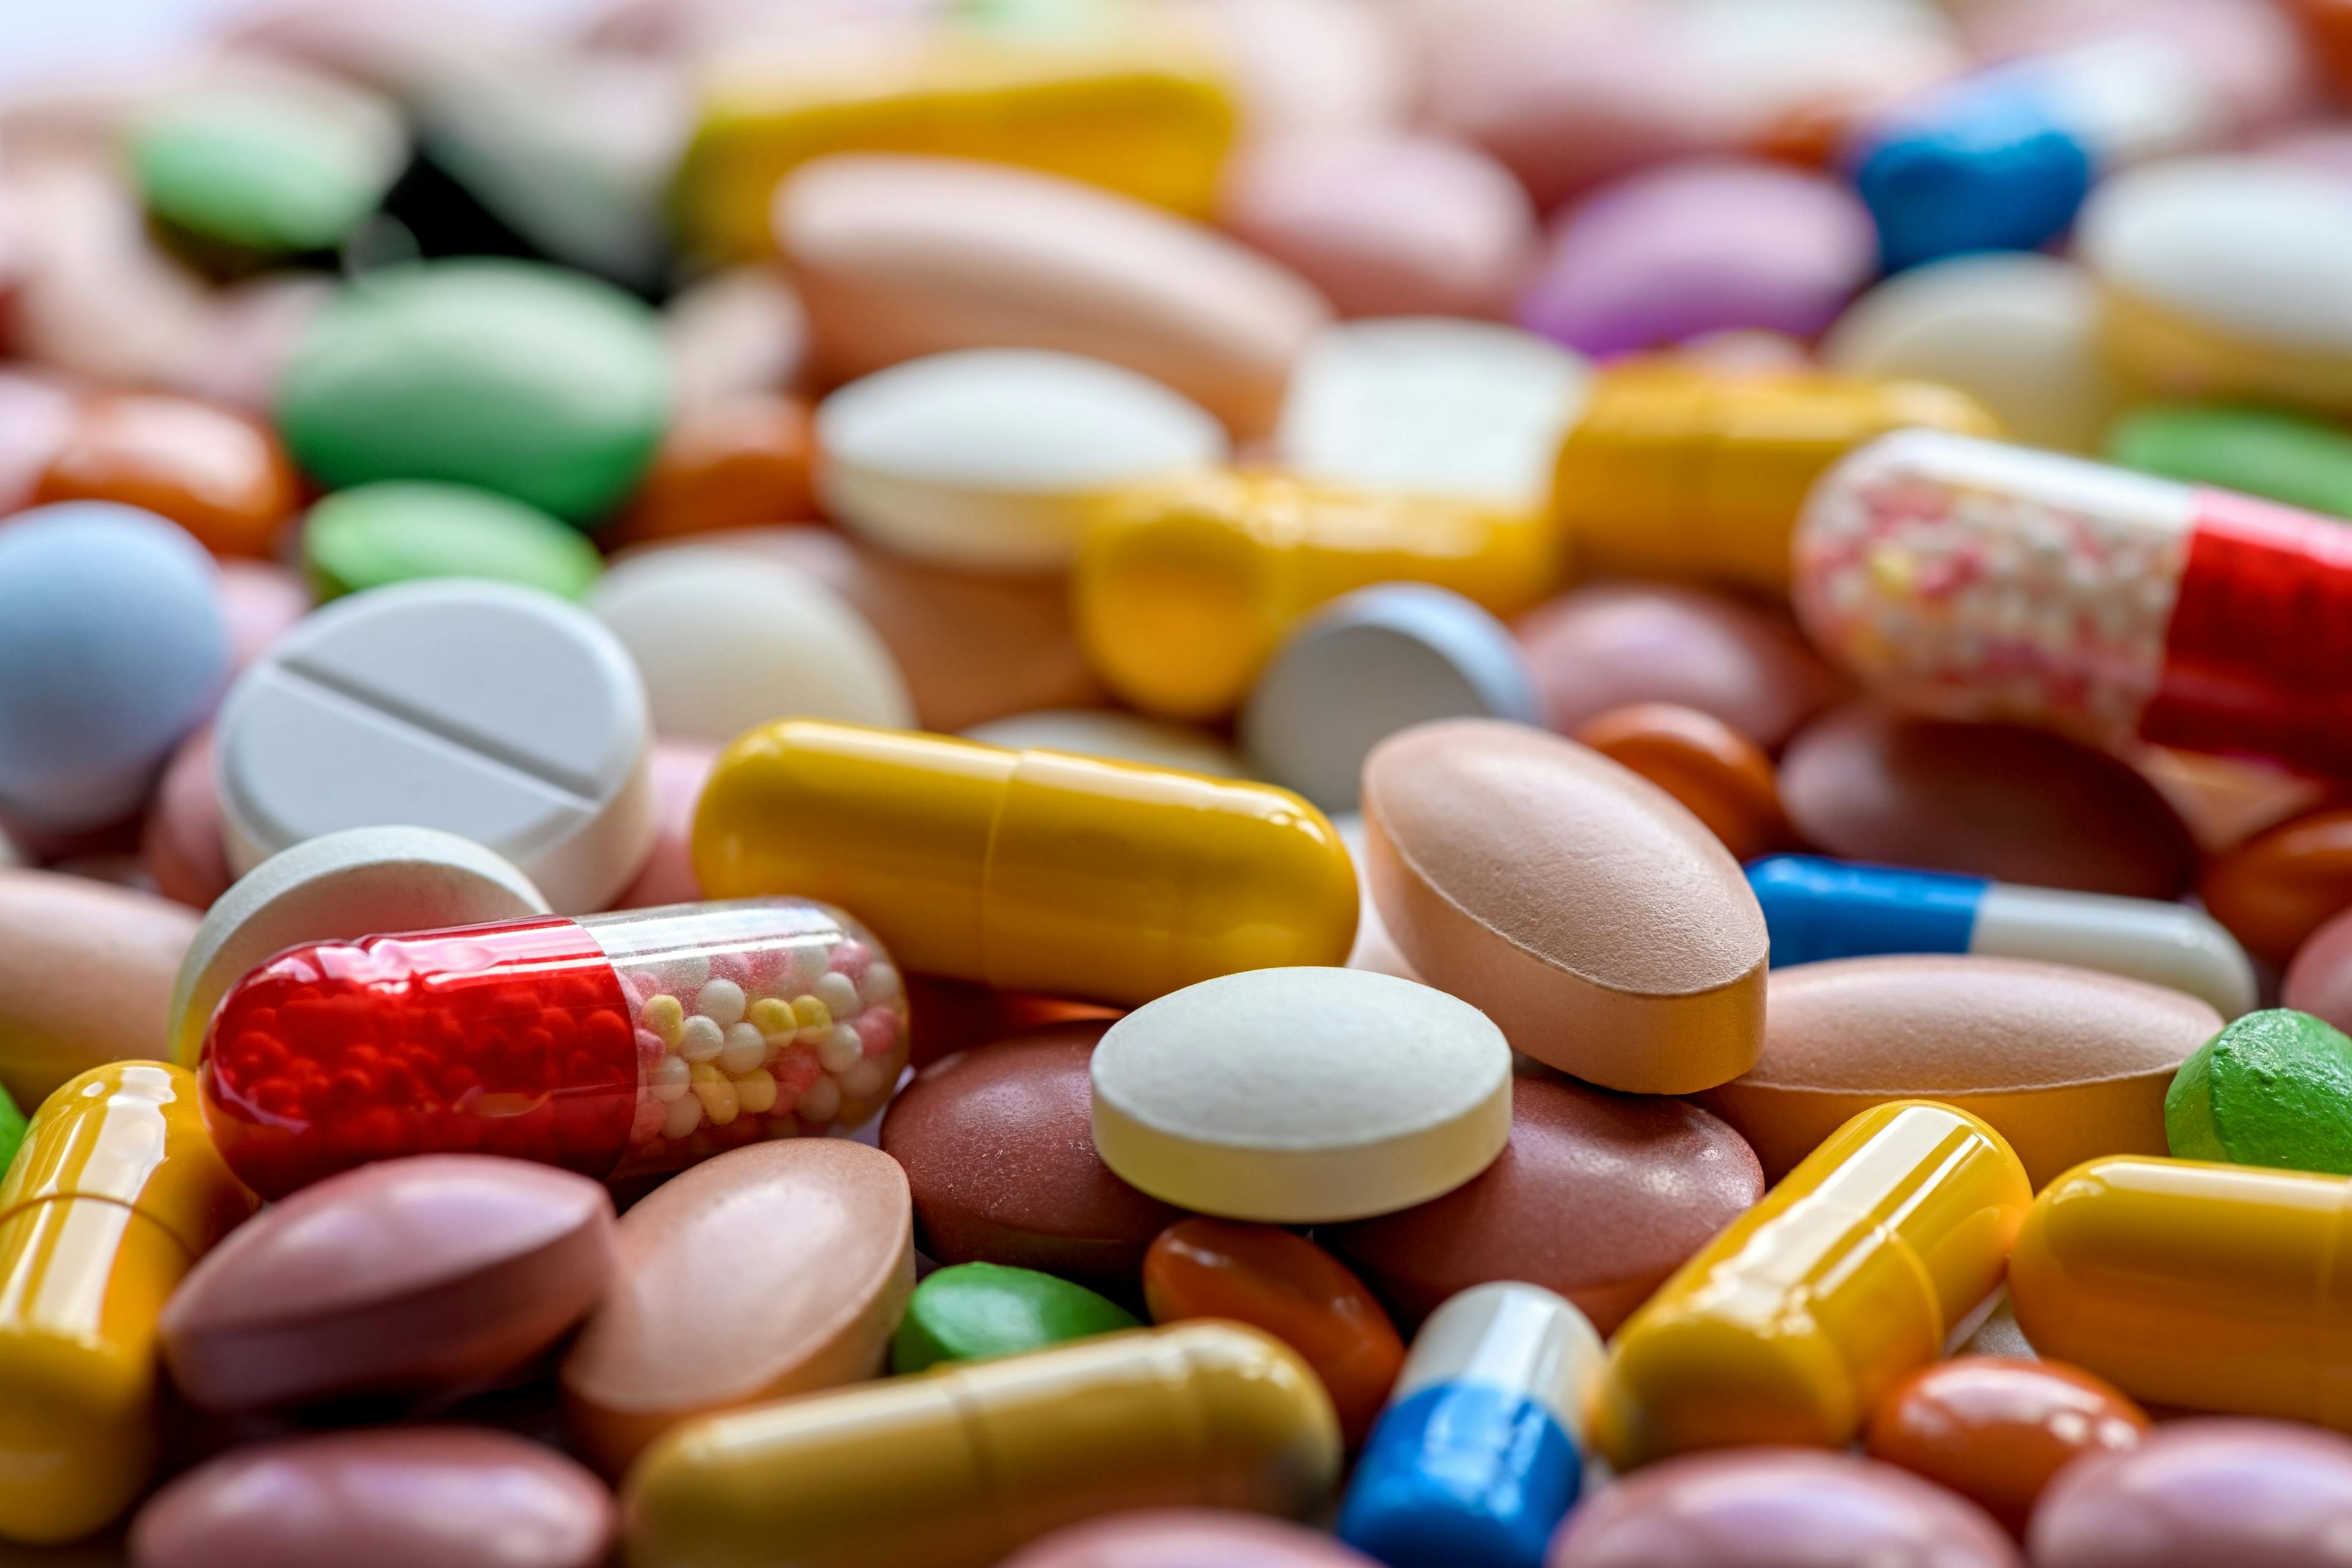 FDA authorizes Pfizer, Merck COVID-19 antiviral pills